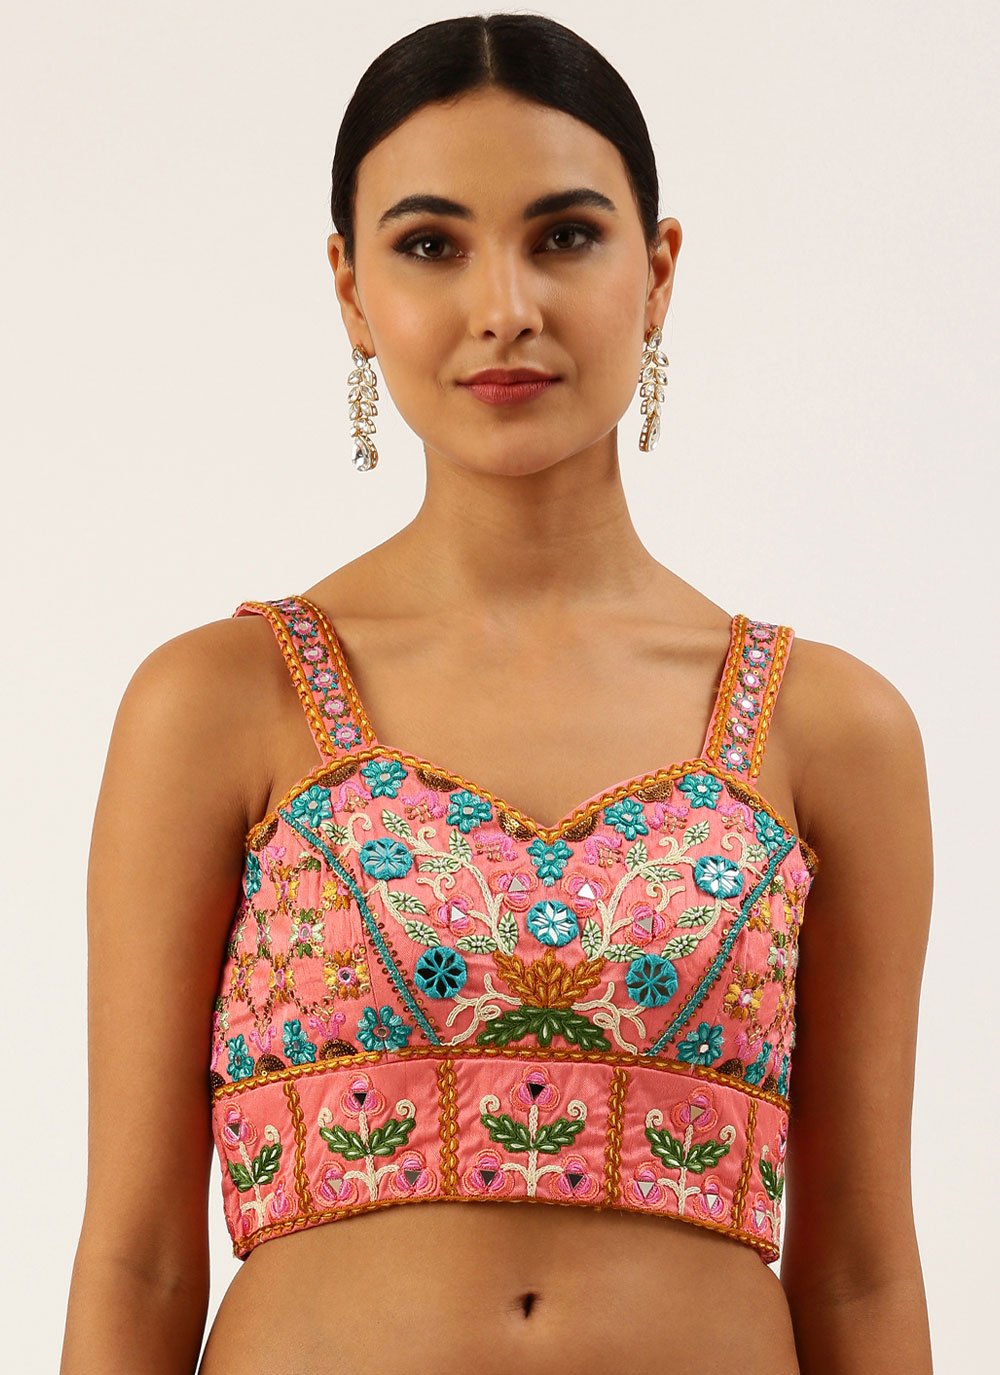 Designer Blouse Silk Pink Embroidered Blouse